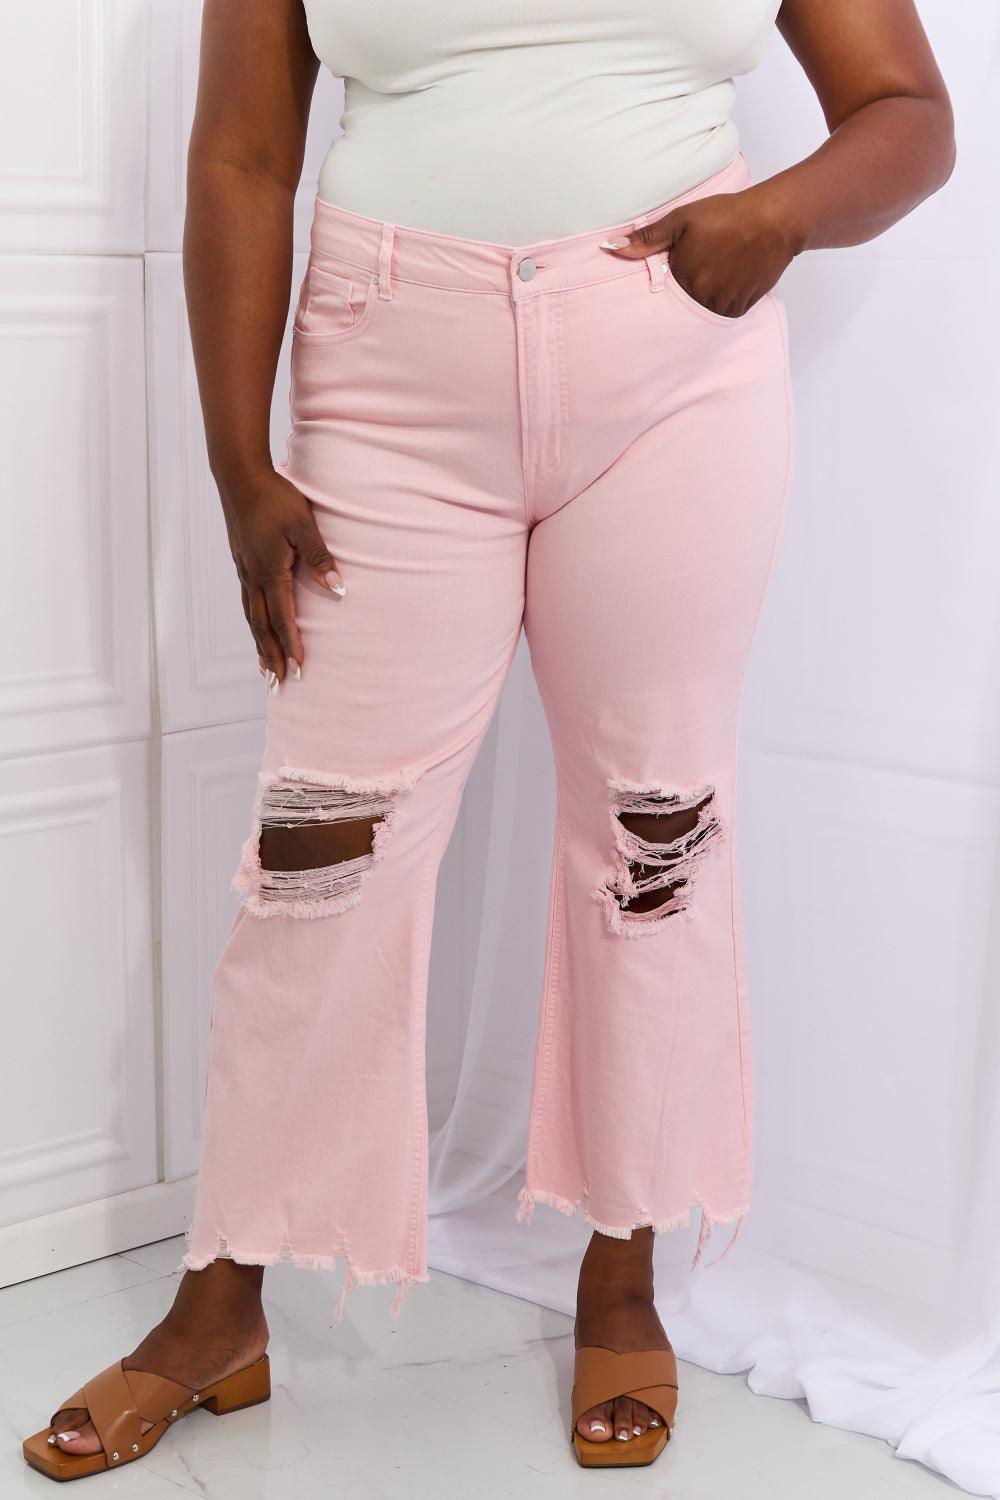 Bona Fide Fashion - Full Size Distressed Ankle Flare Jeans - Women Fashion - Bona Fide Fashion